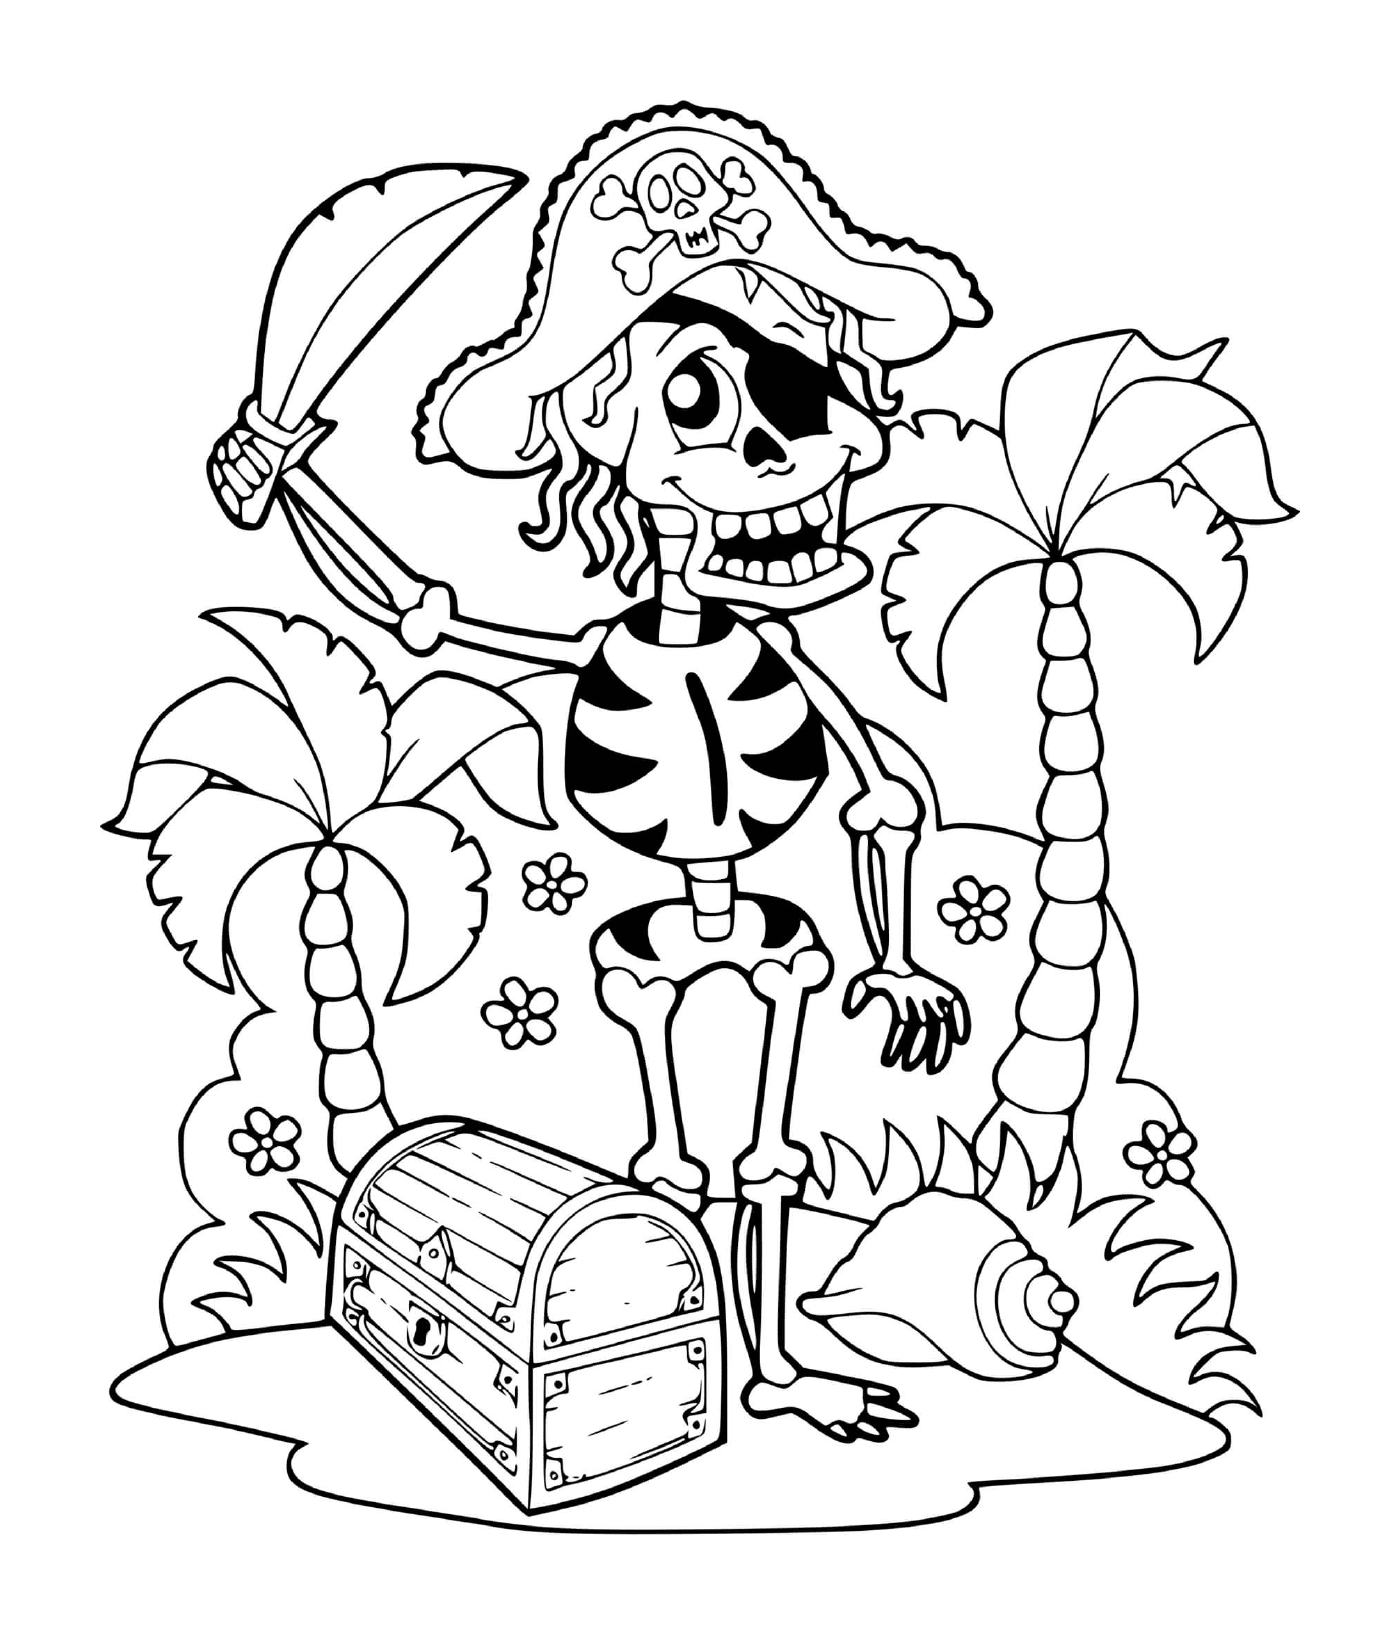  Esqueleto pirata con tesoro 